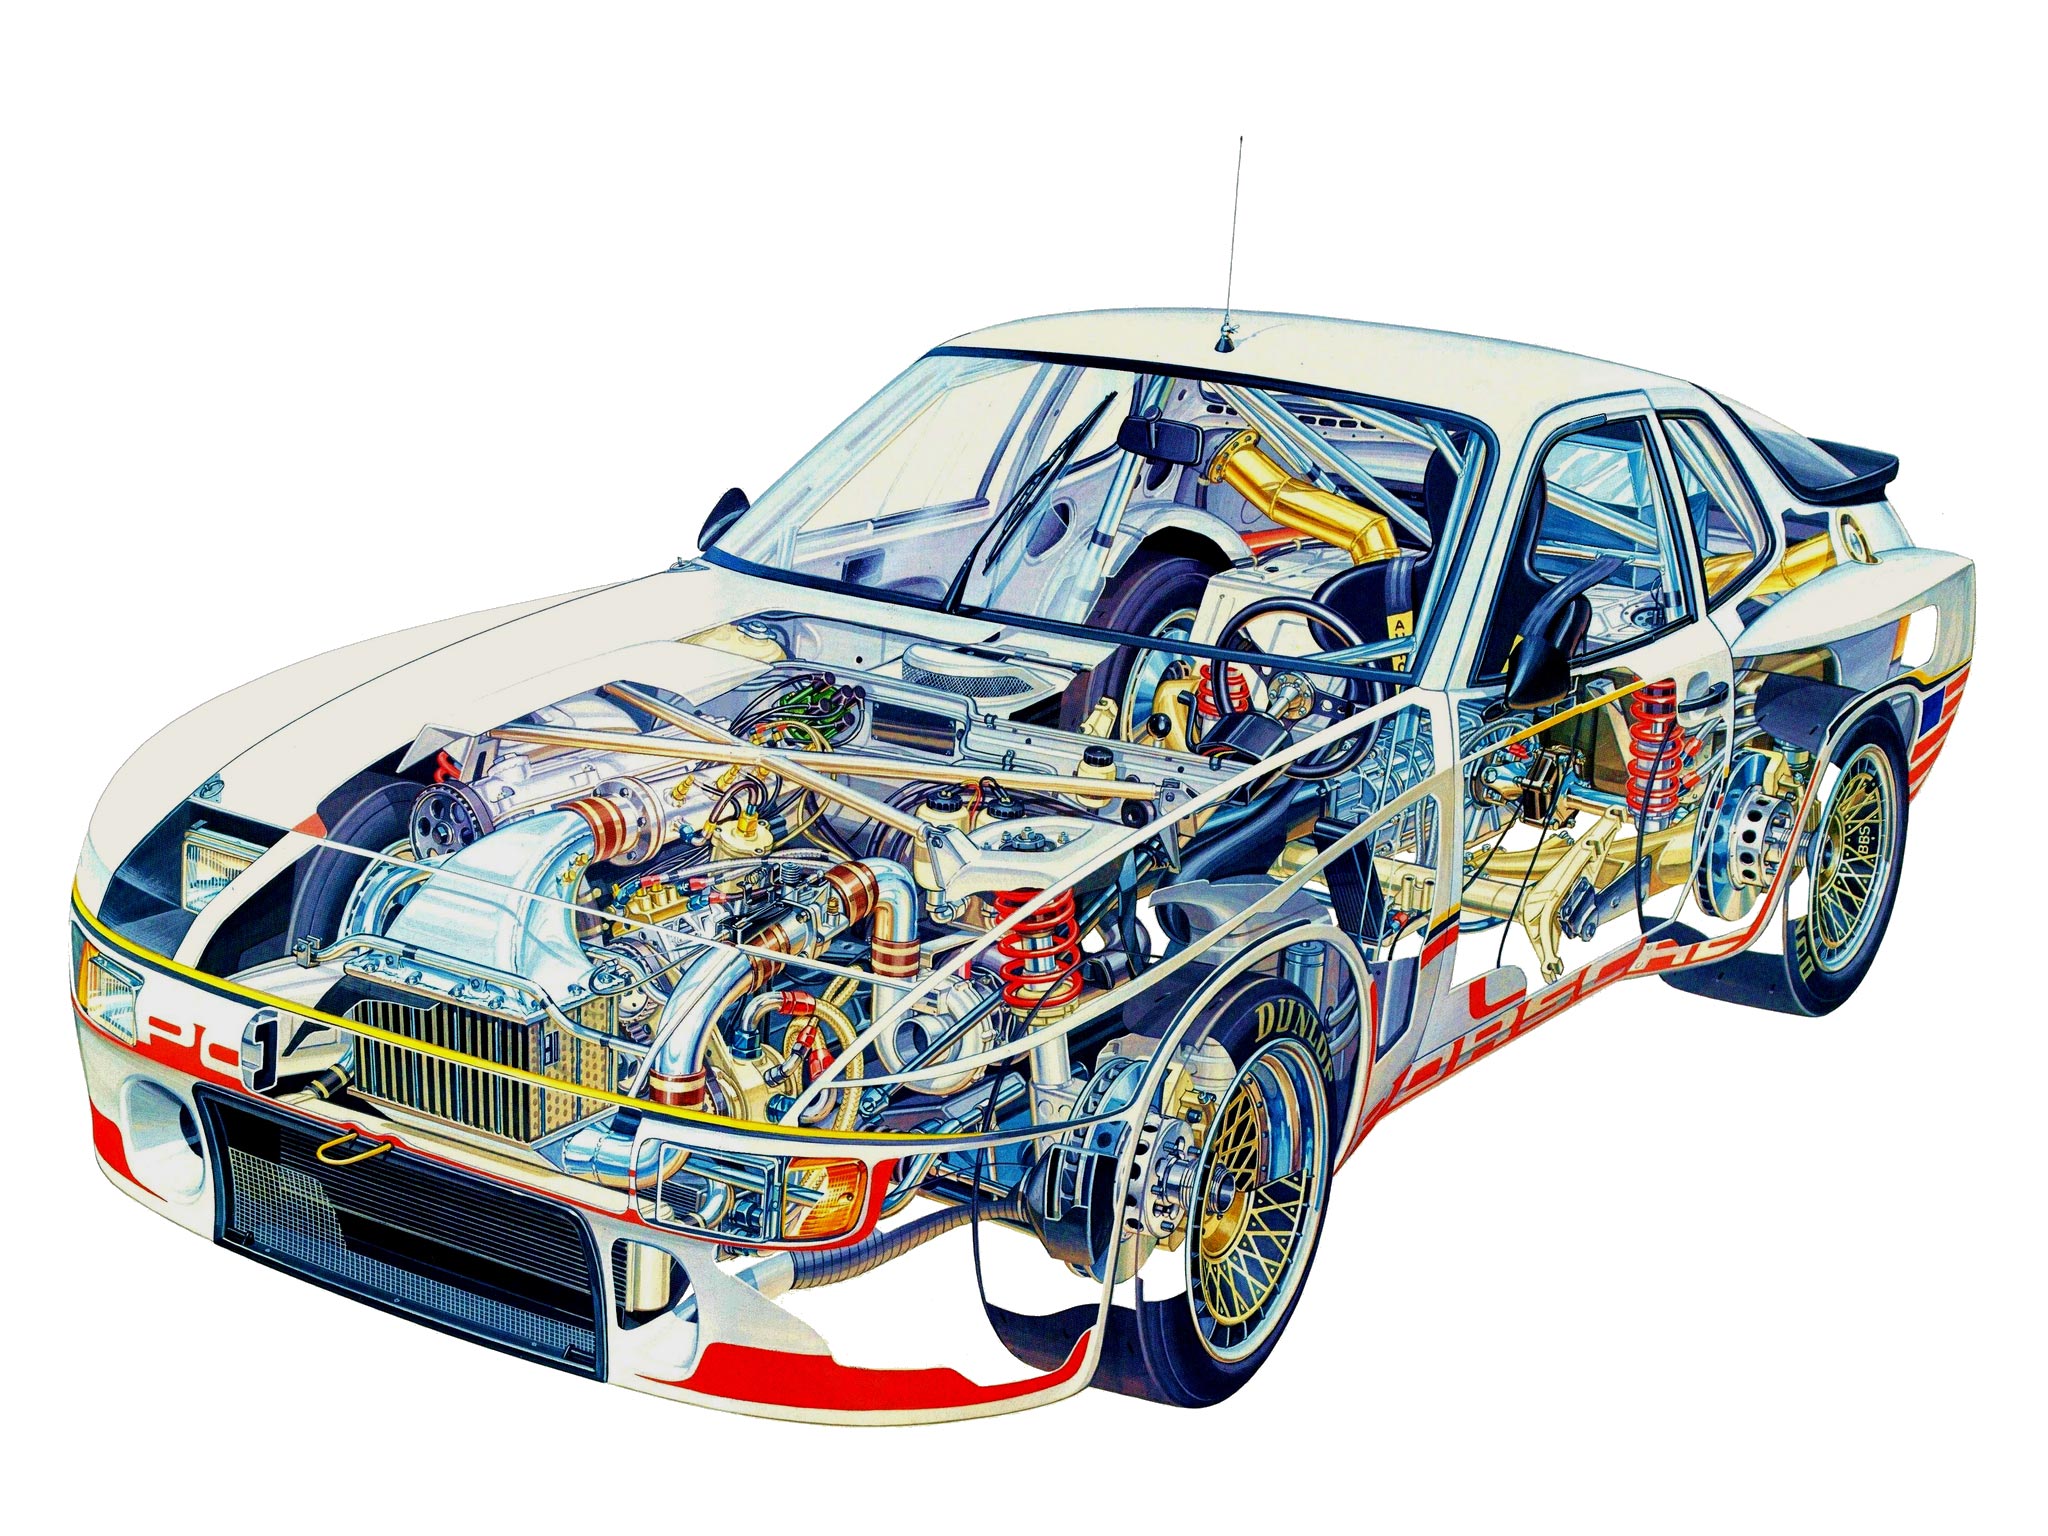 Porsche 924 Le Mans cutaway drawing